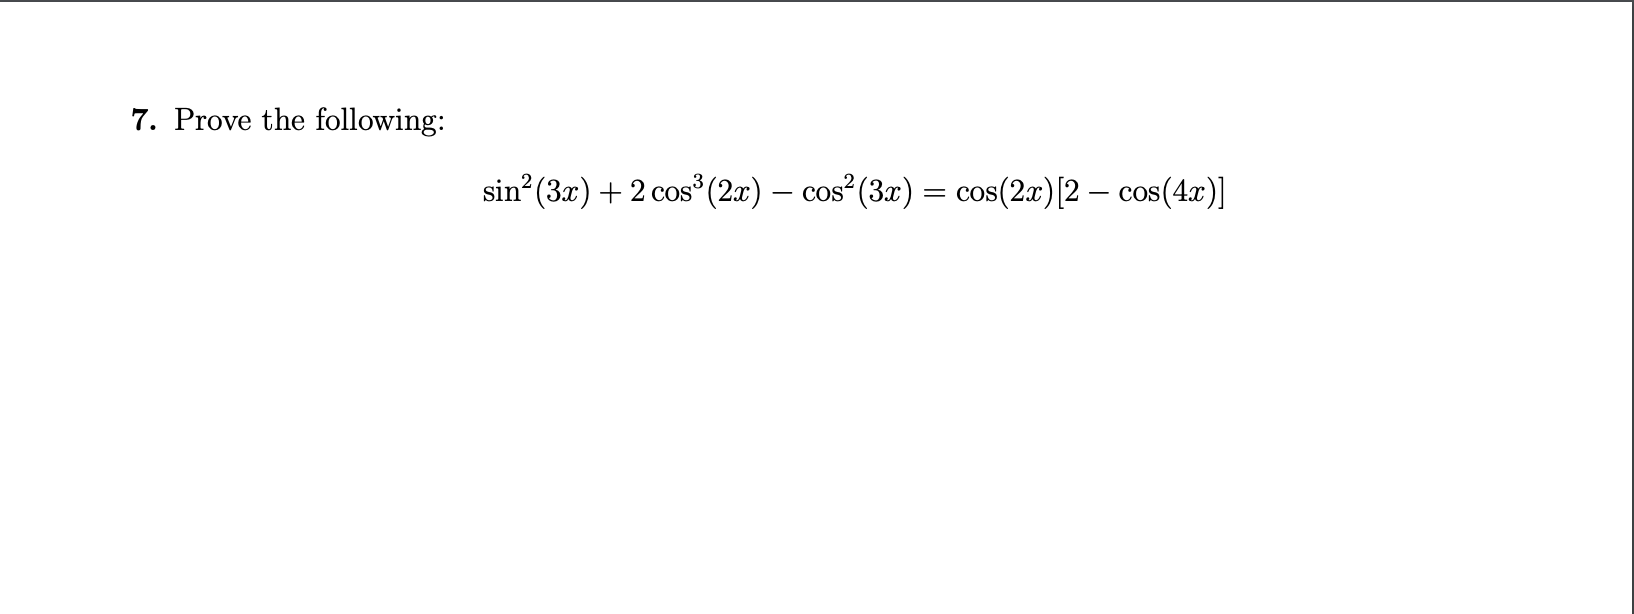 7. Prove the following:
sin (3x) + 2 cos (2x) – cos (3x) = cos(2x)[2 – cos(4r)]
